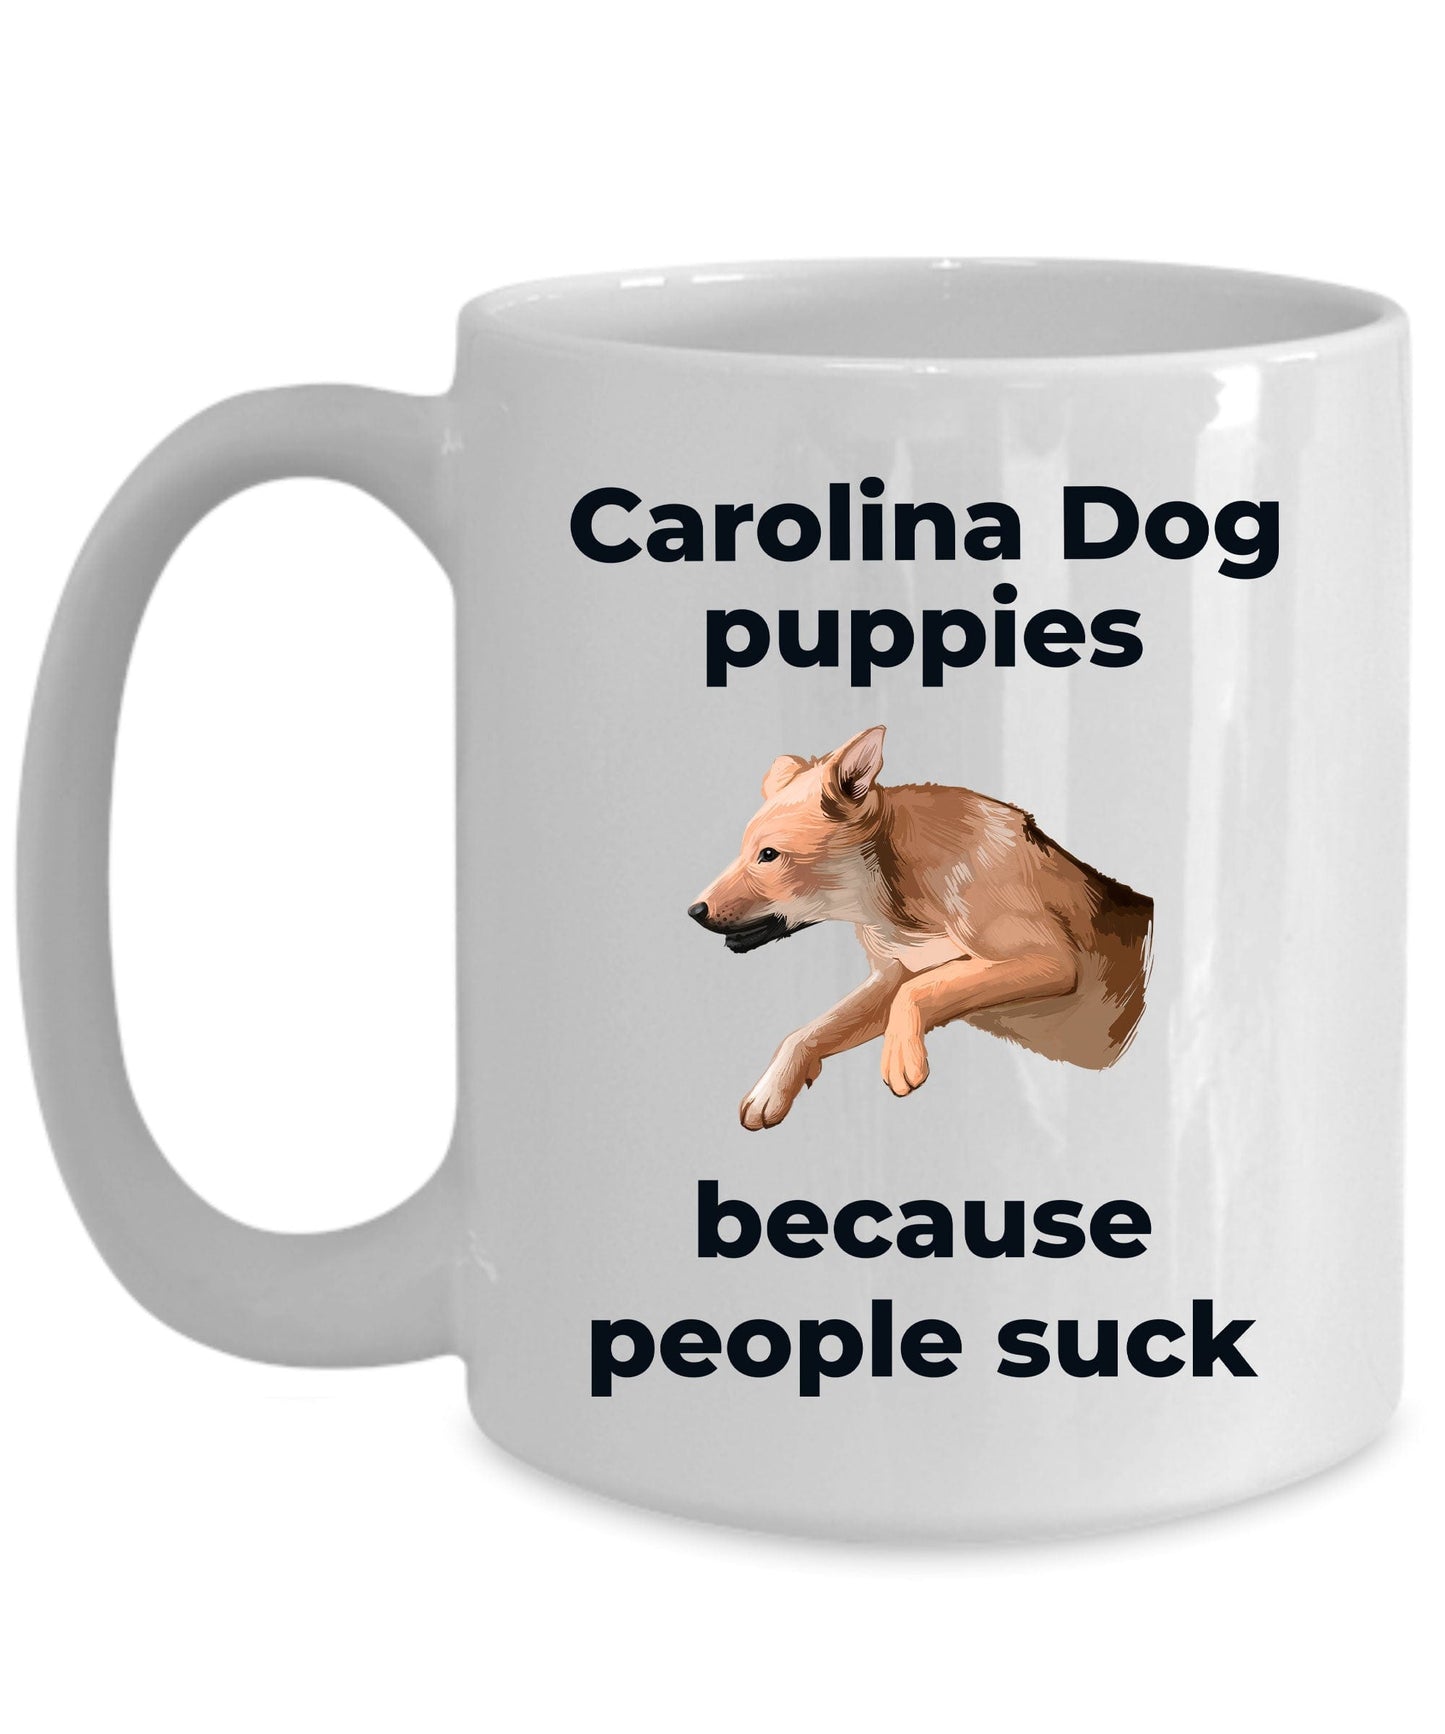 Carolina Dog Coffee Mug - Carolina Puppies because people sick